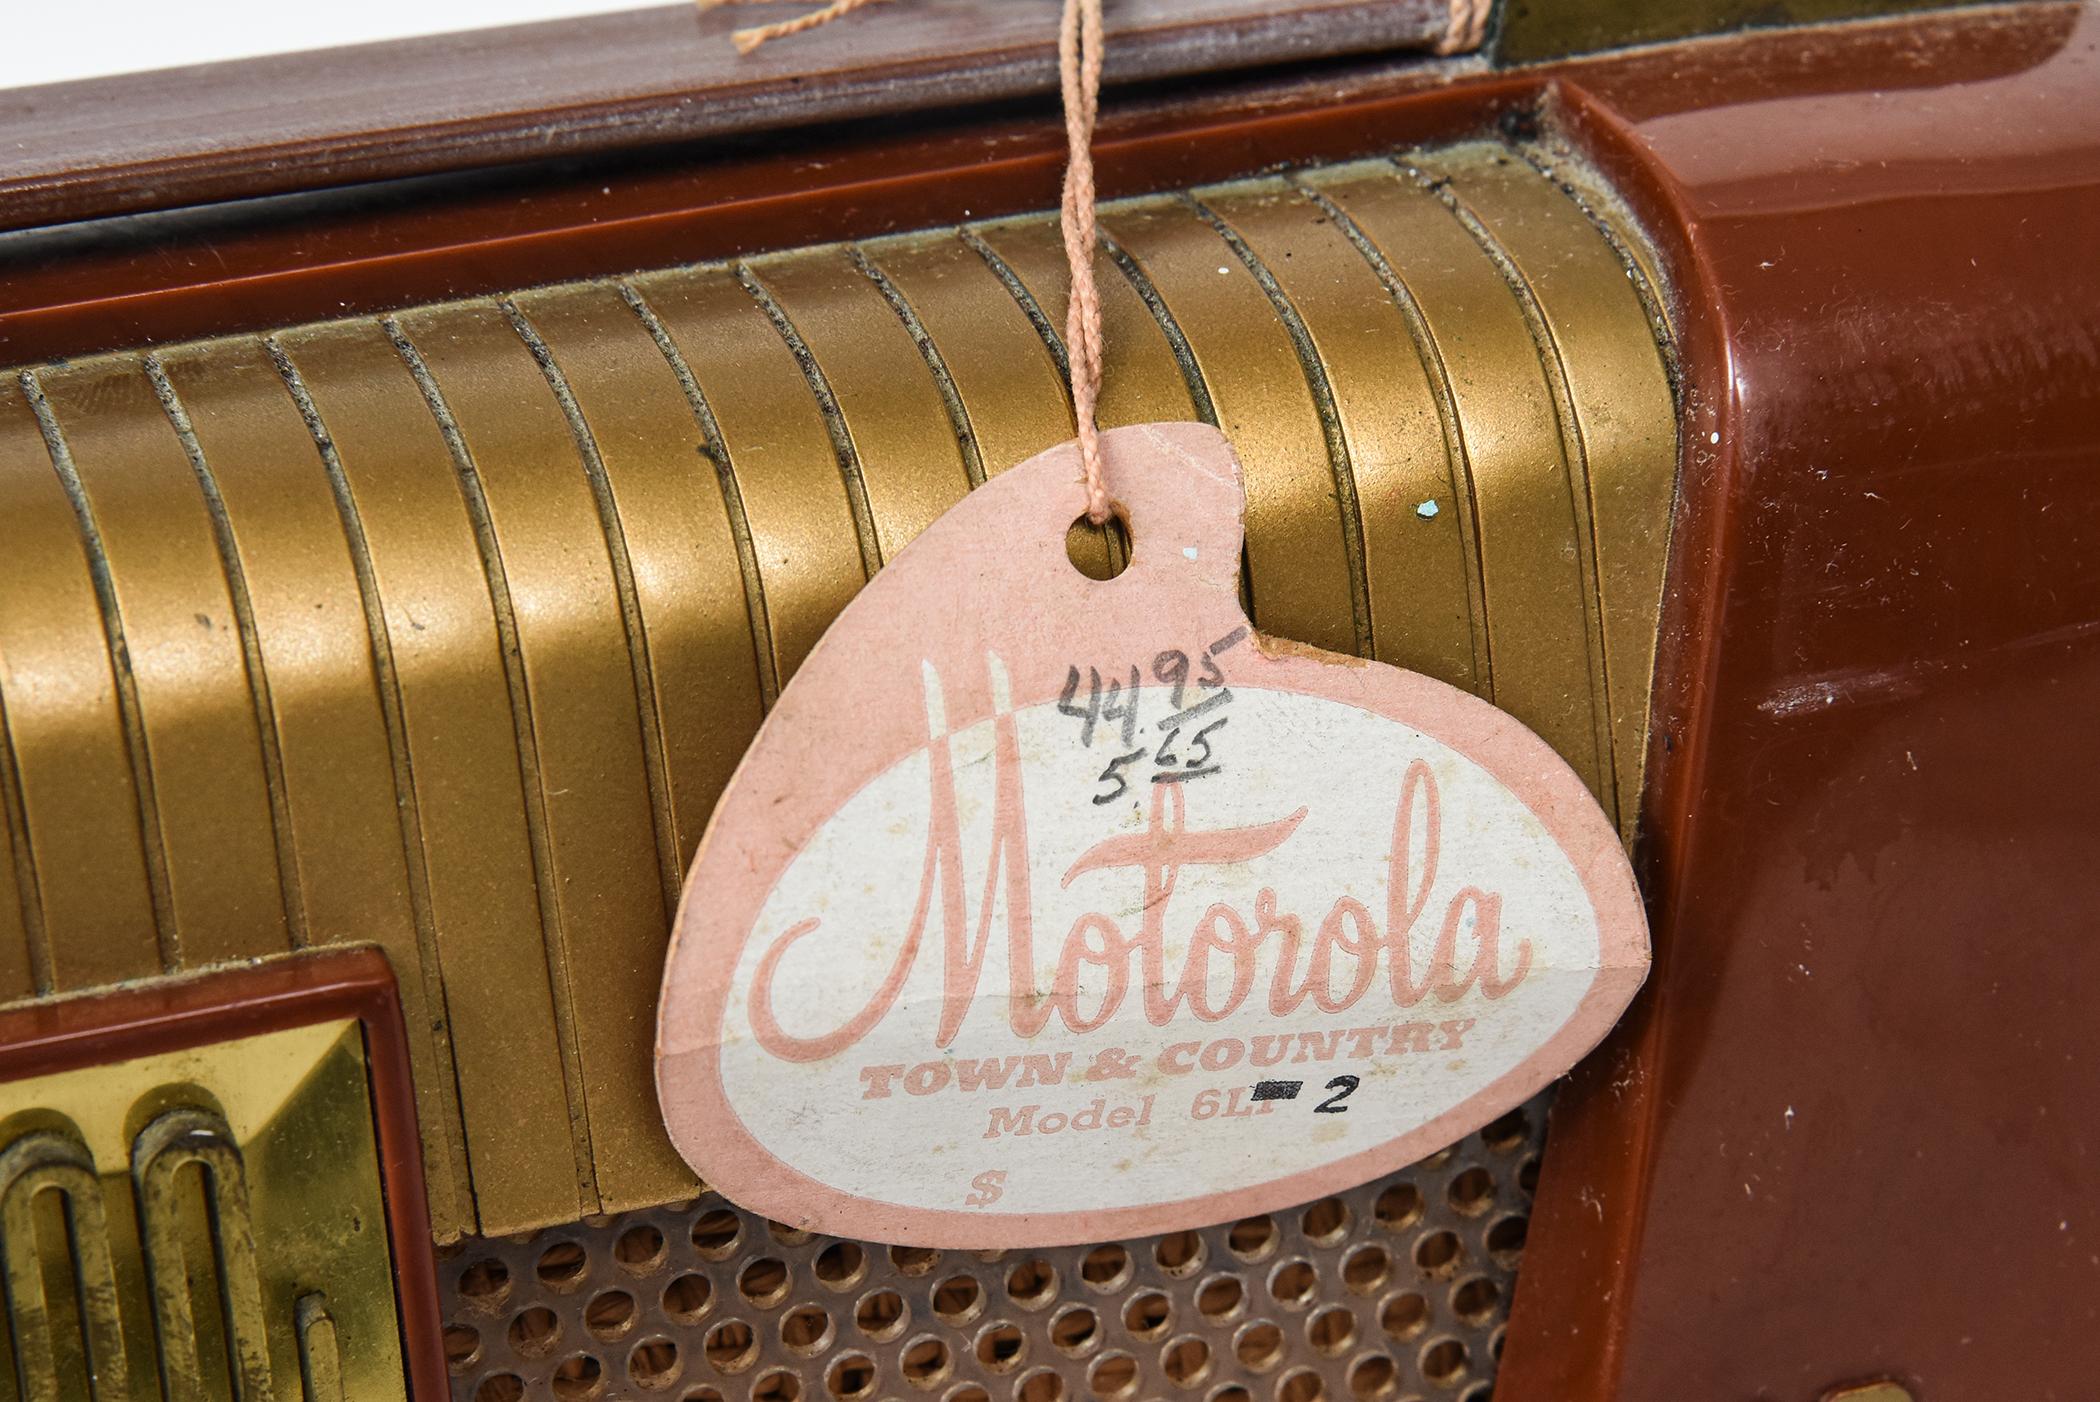 1950s portable radio